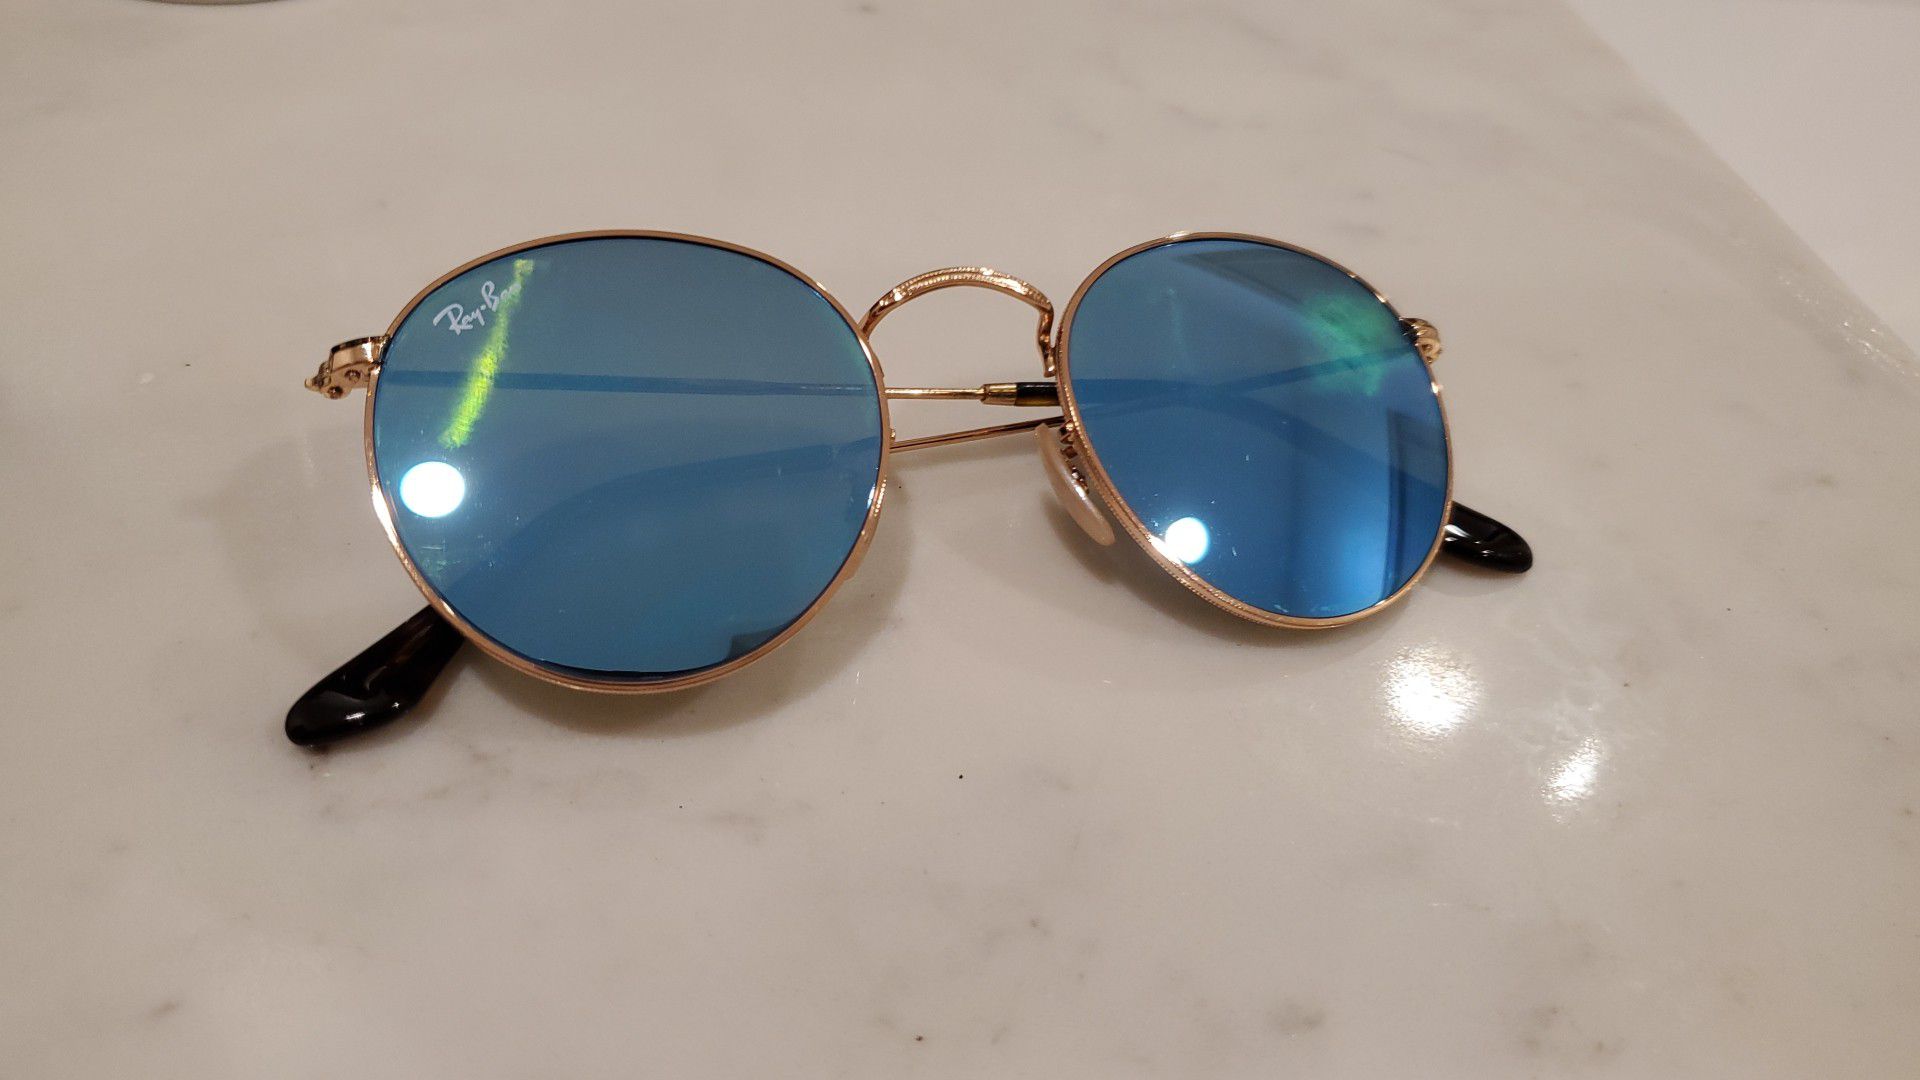 Rayban blue mirror sun glasses